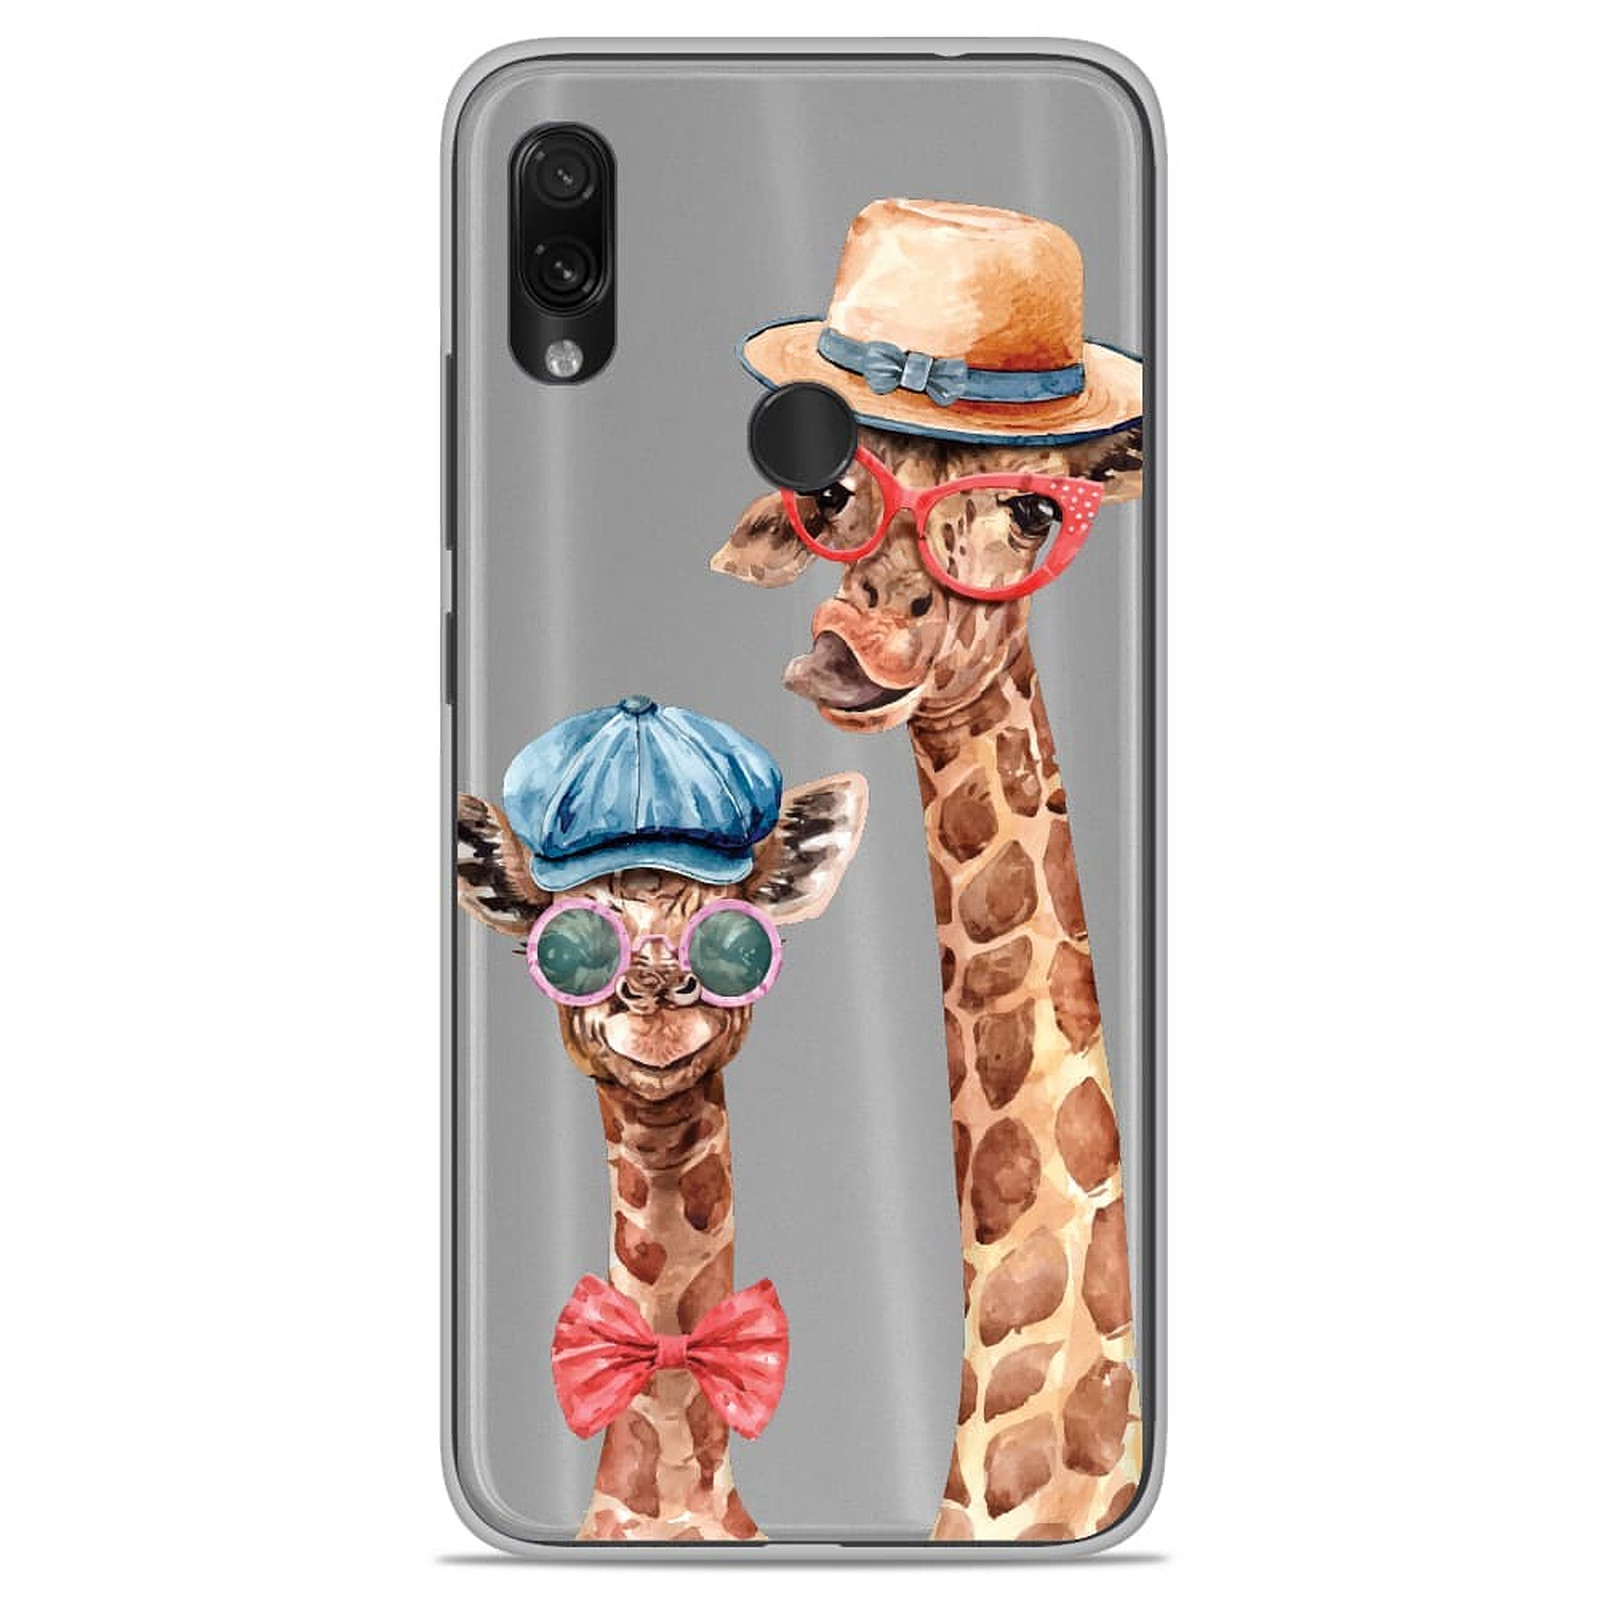 1001 Coques Coque silicone gel Xiaomi Redmi Note 7 / Note 7 Pro motif Funny Girafe - Coque telephone 1001Coques